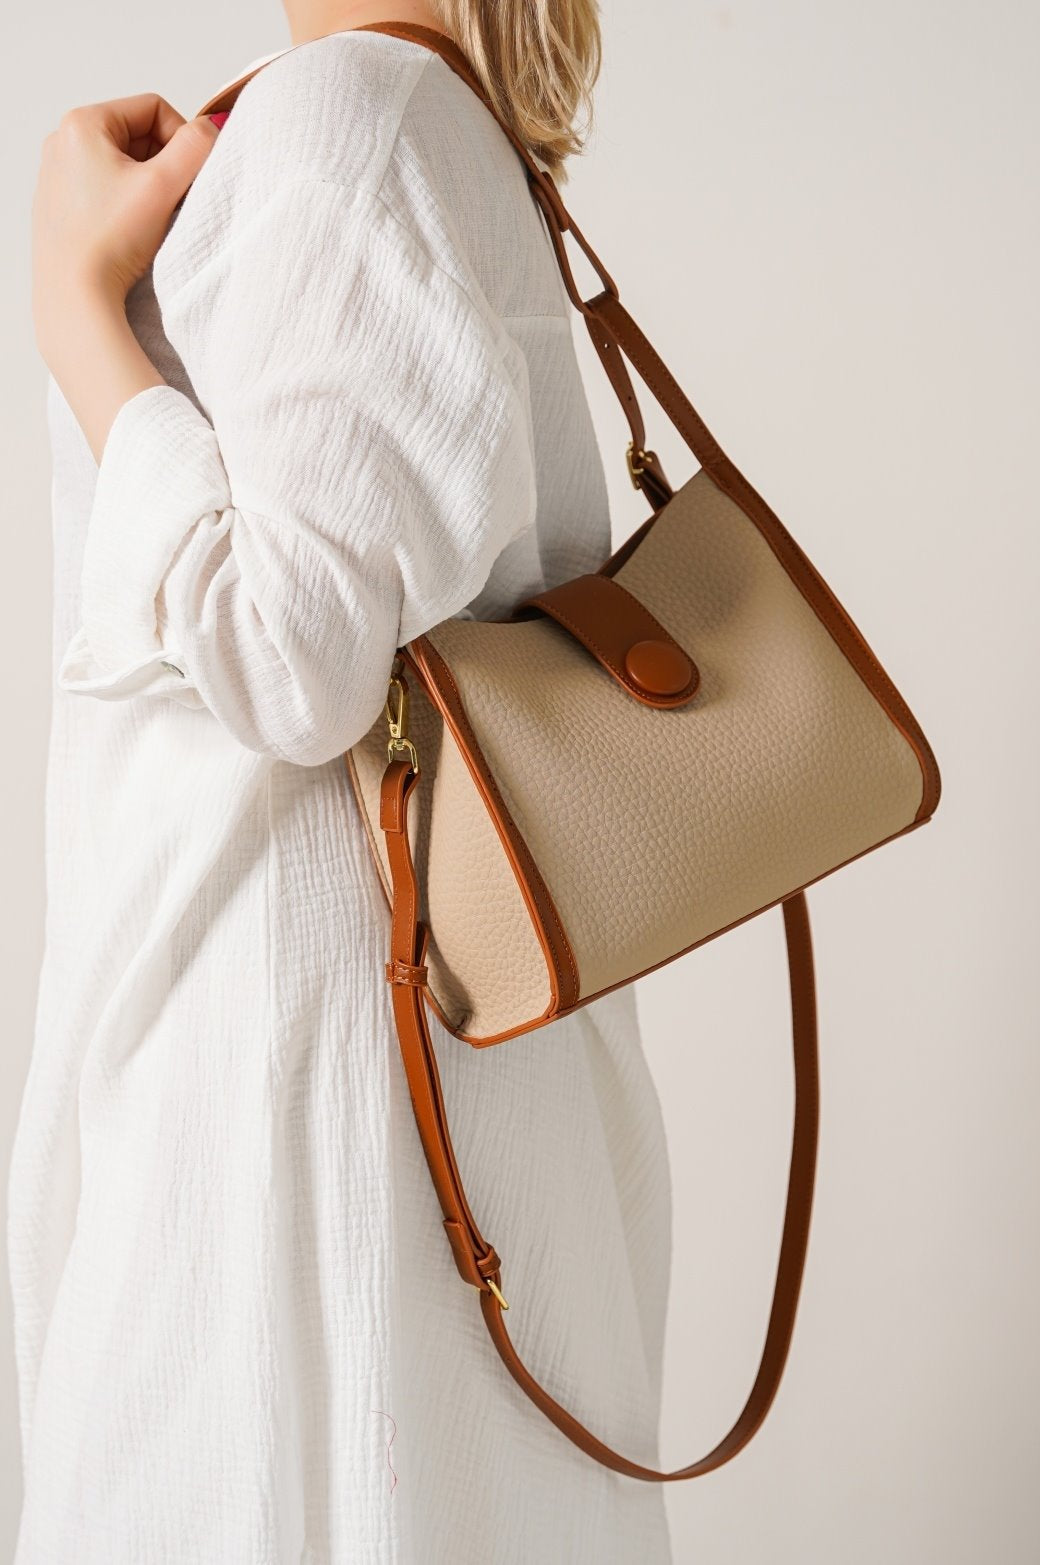 Vera Pelle Small Brown Leather Tan Handbag Italy Crossbody Purse Bag EUC  ADJUST | eBay